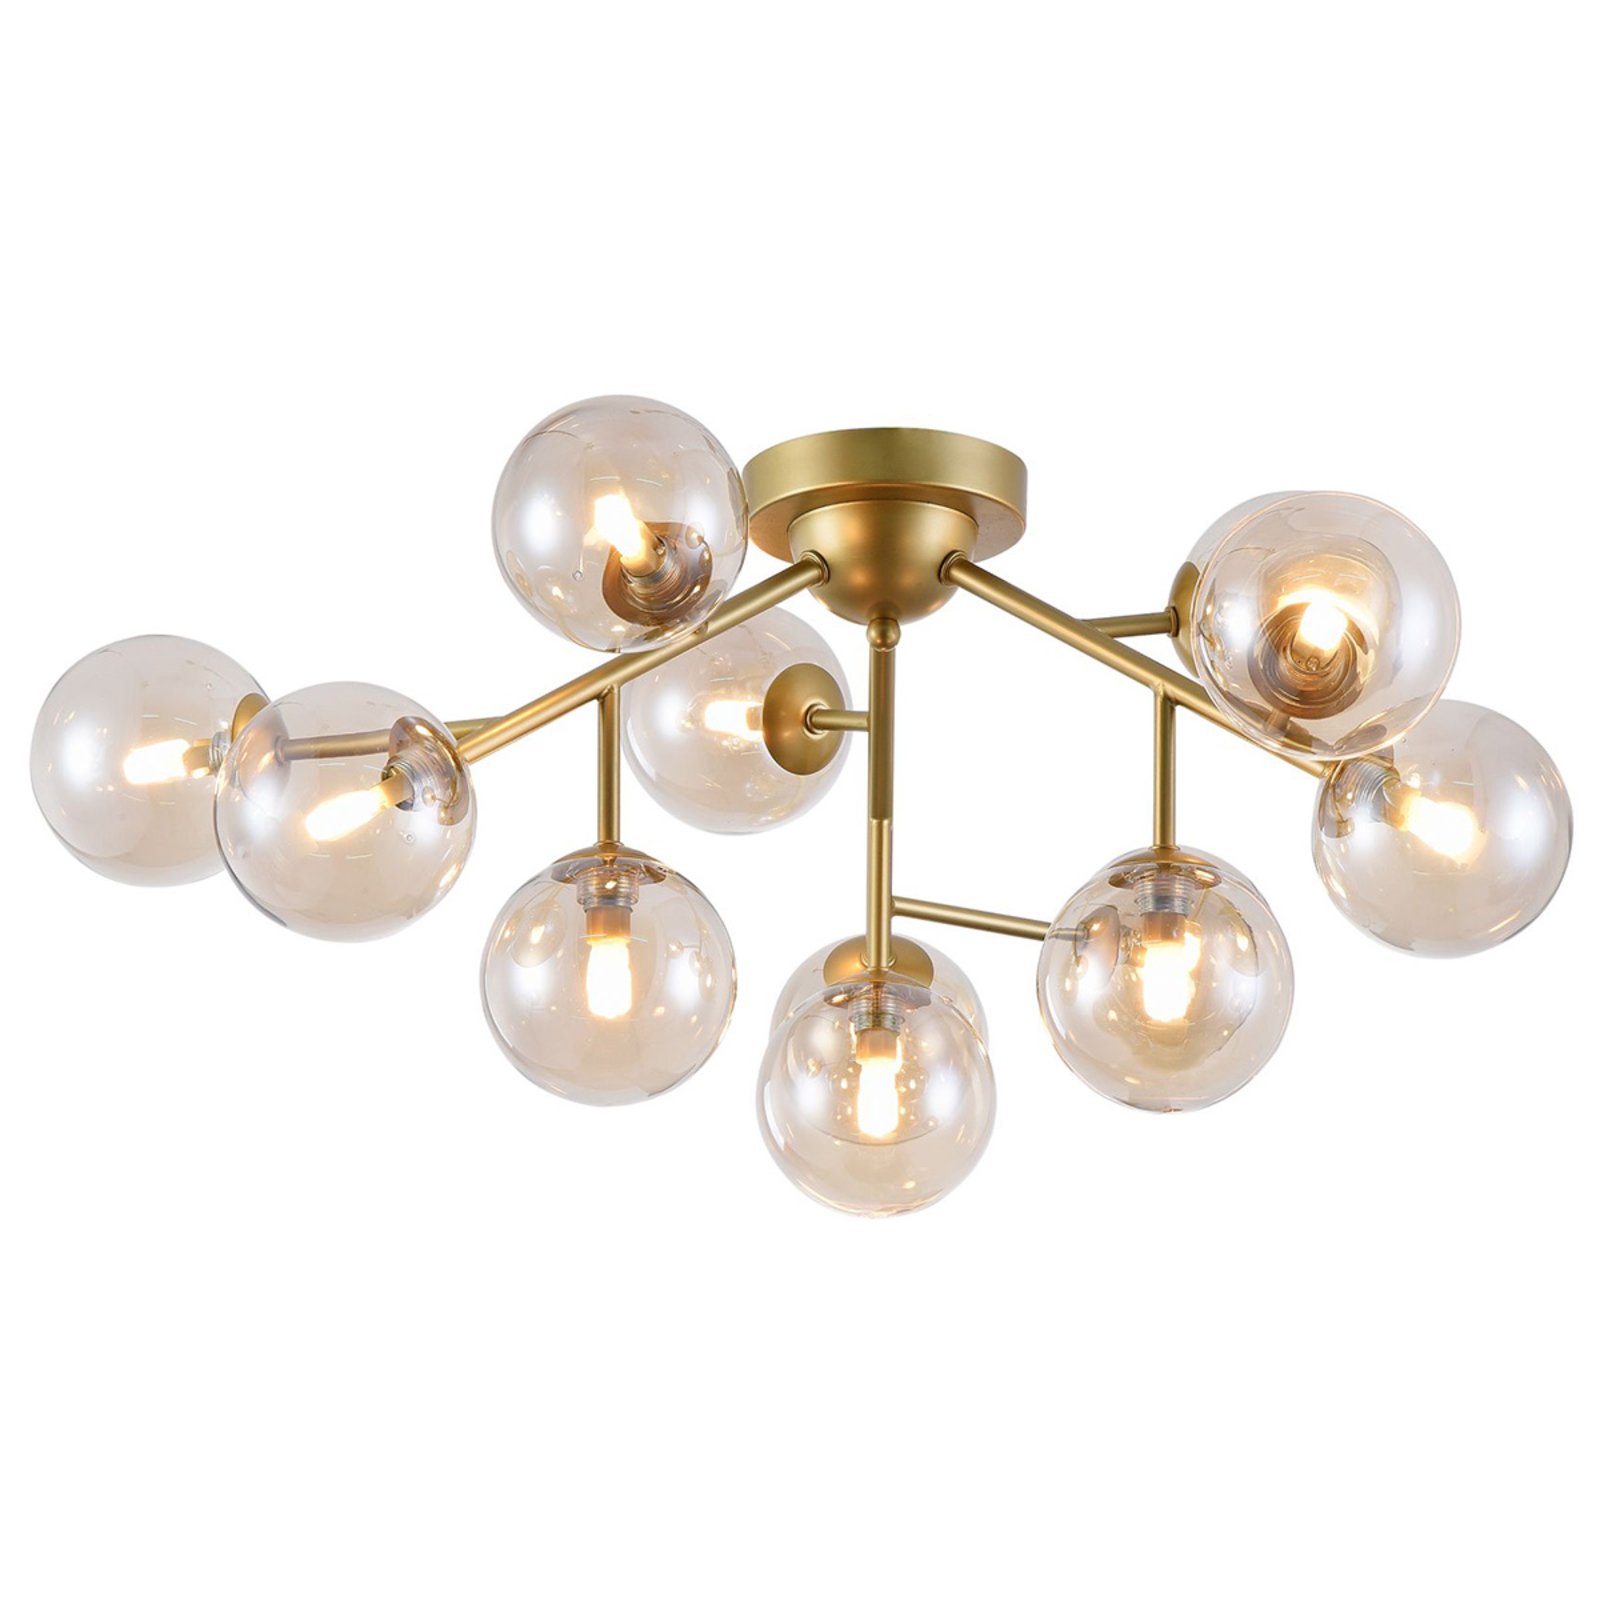 Plafondlamp Dallas met 12 glasbollen, goud